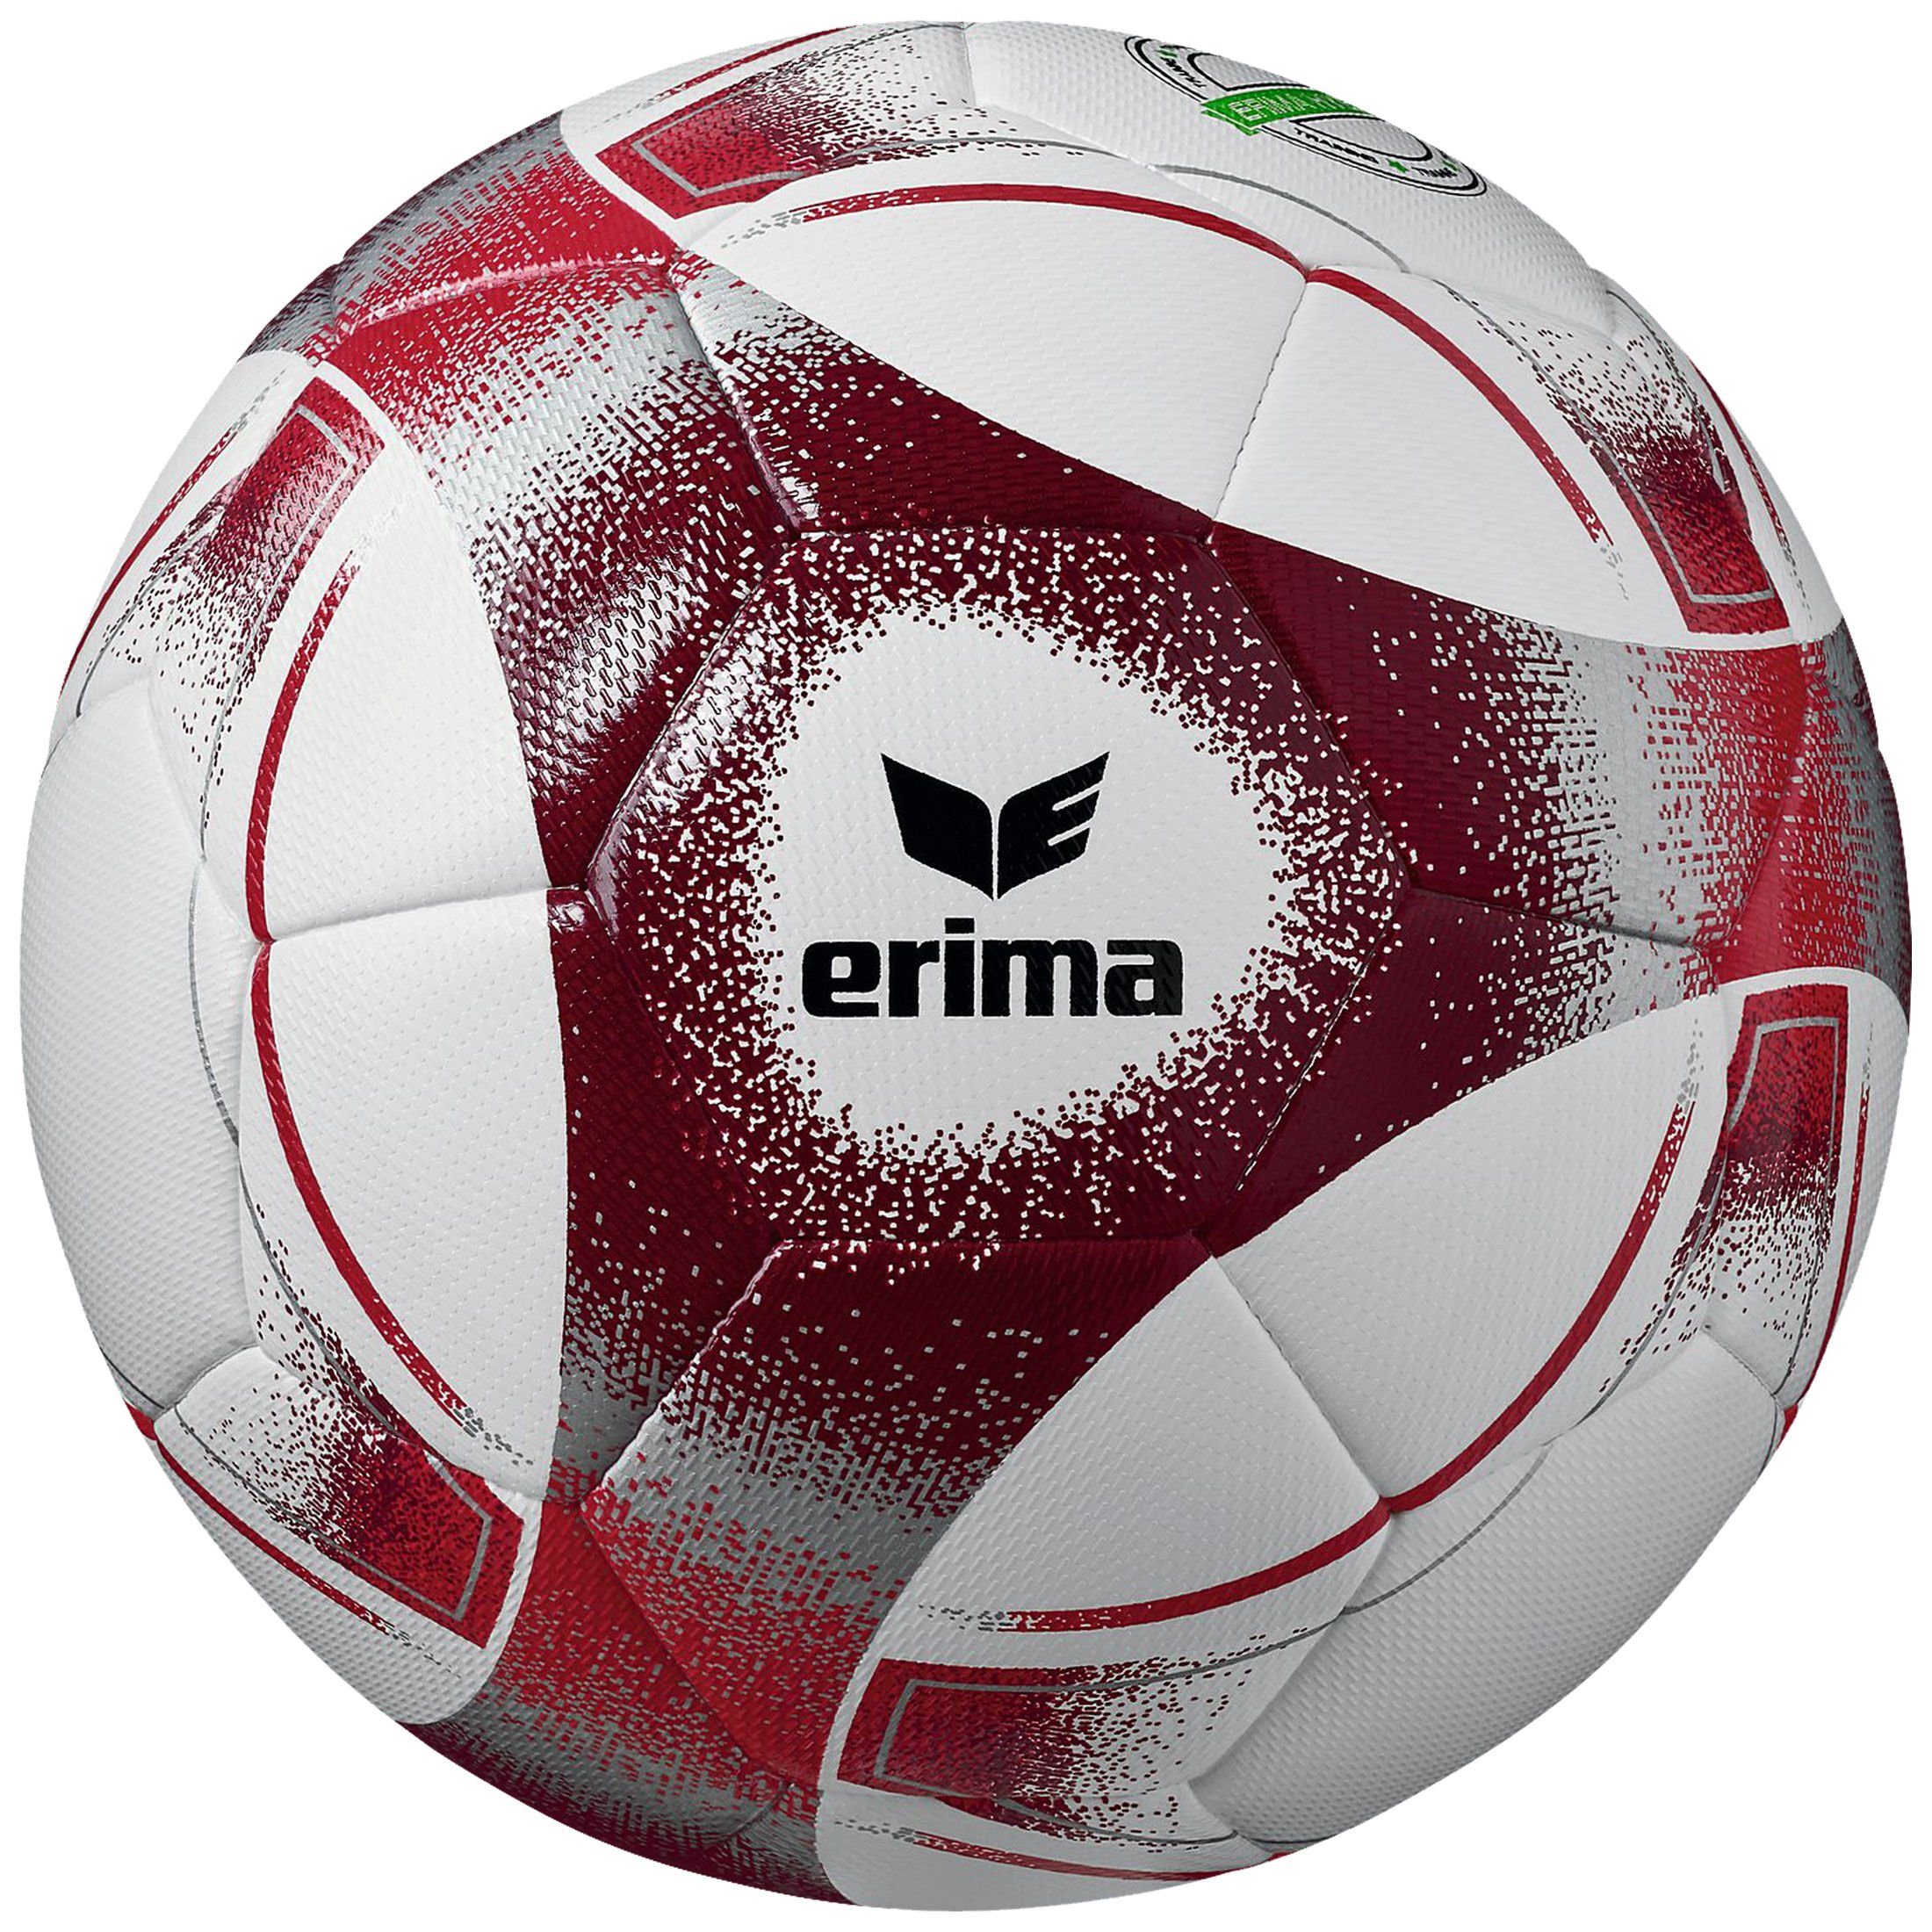 Erima Fußball Hybrid Training Fußball bordeaux / rot